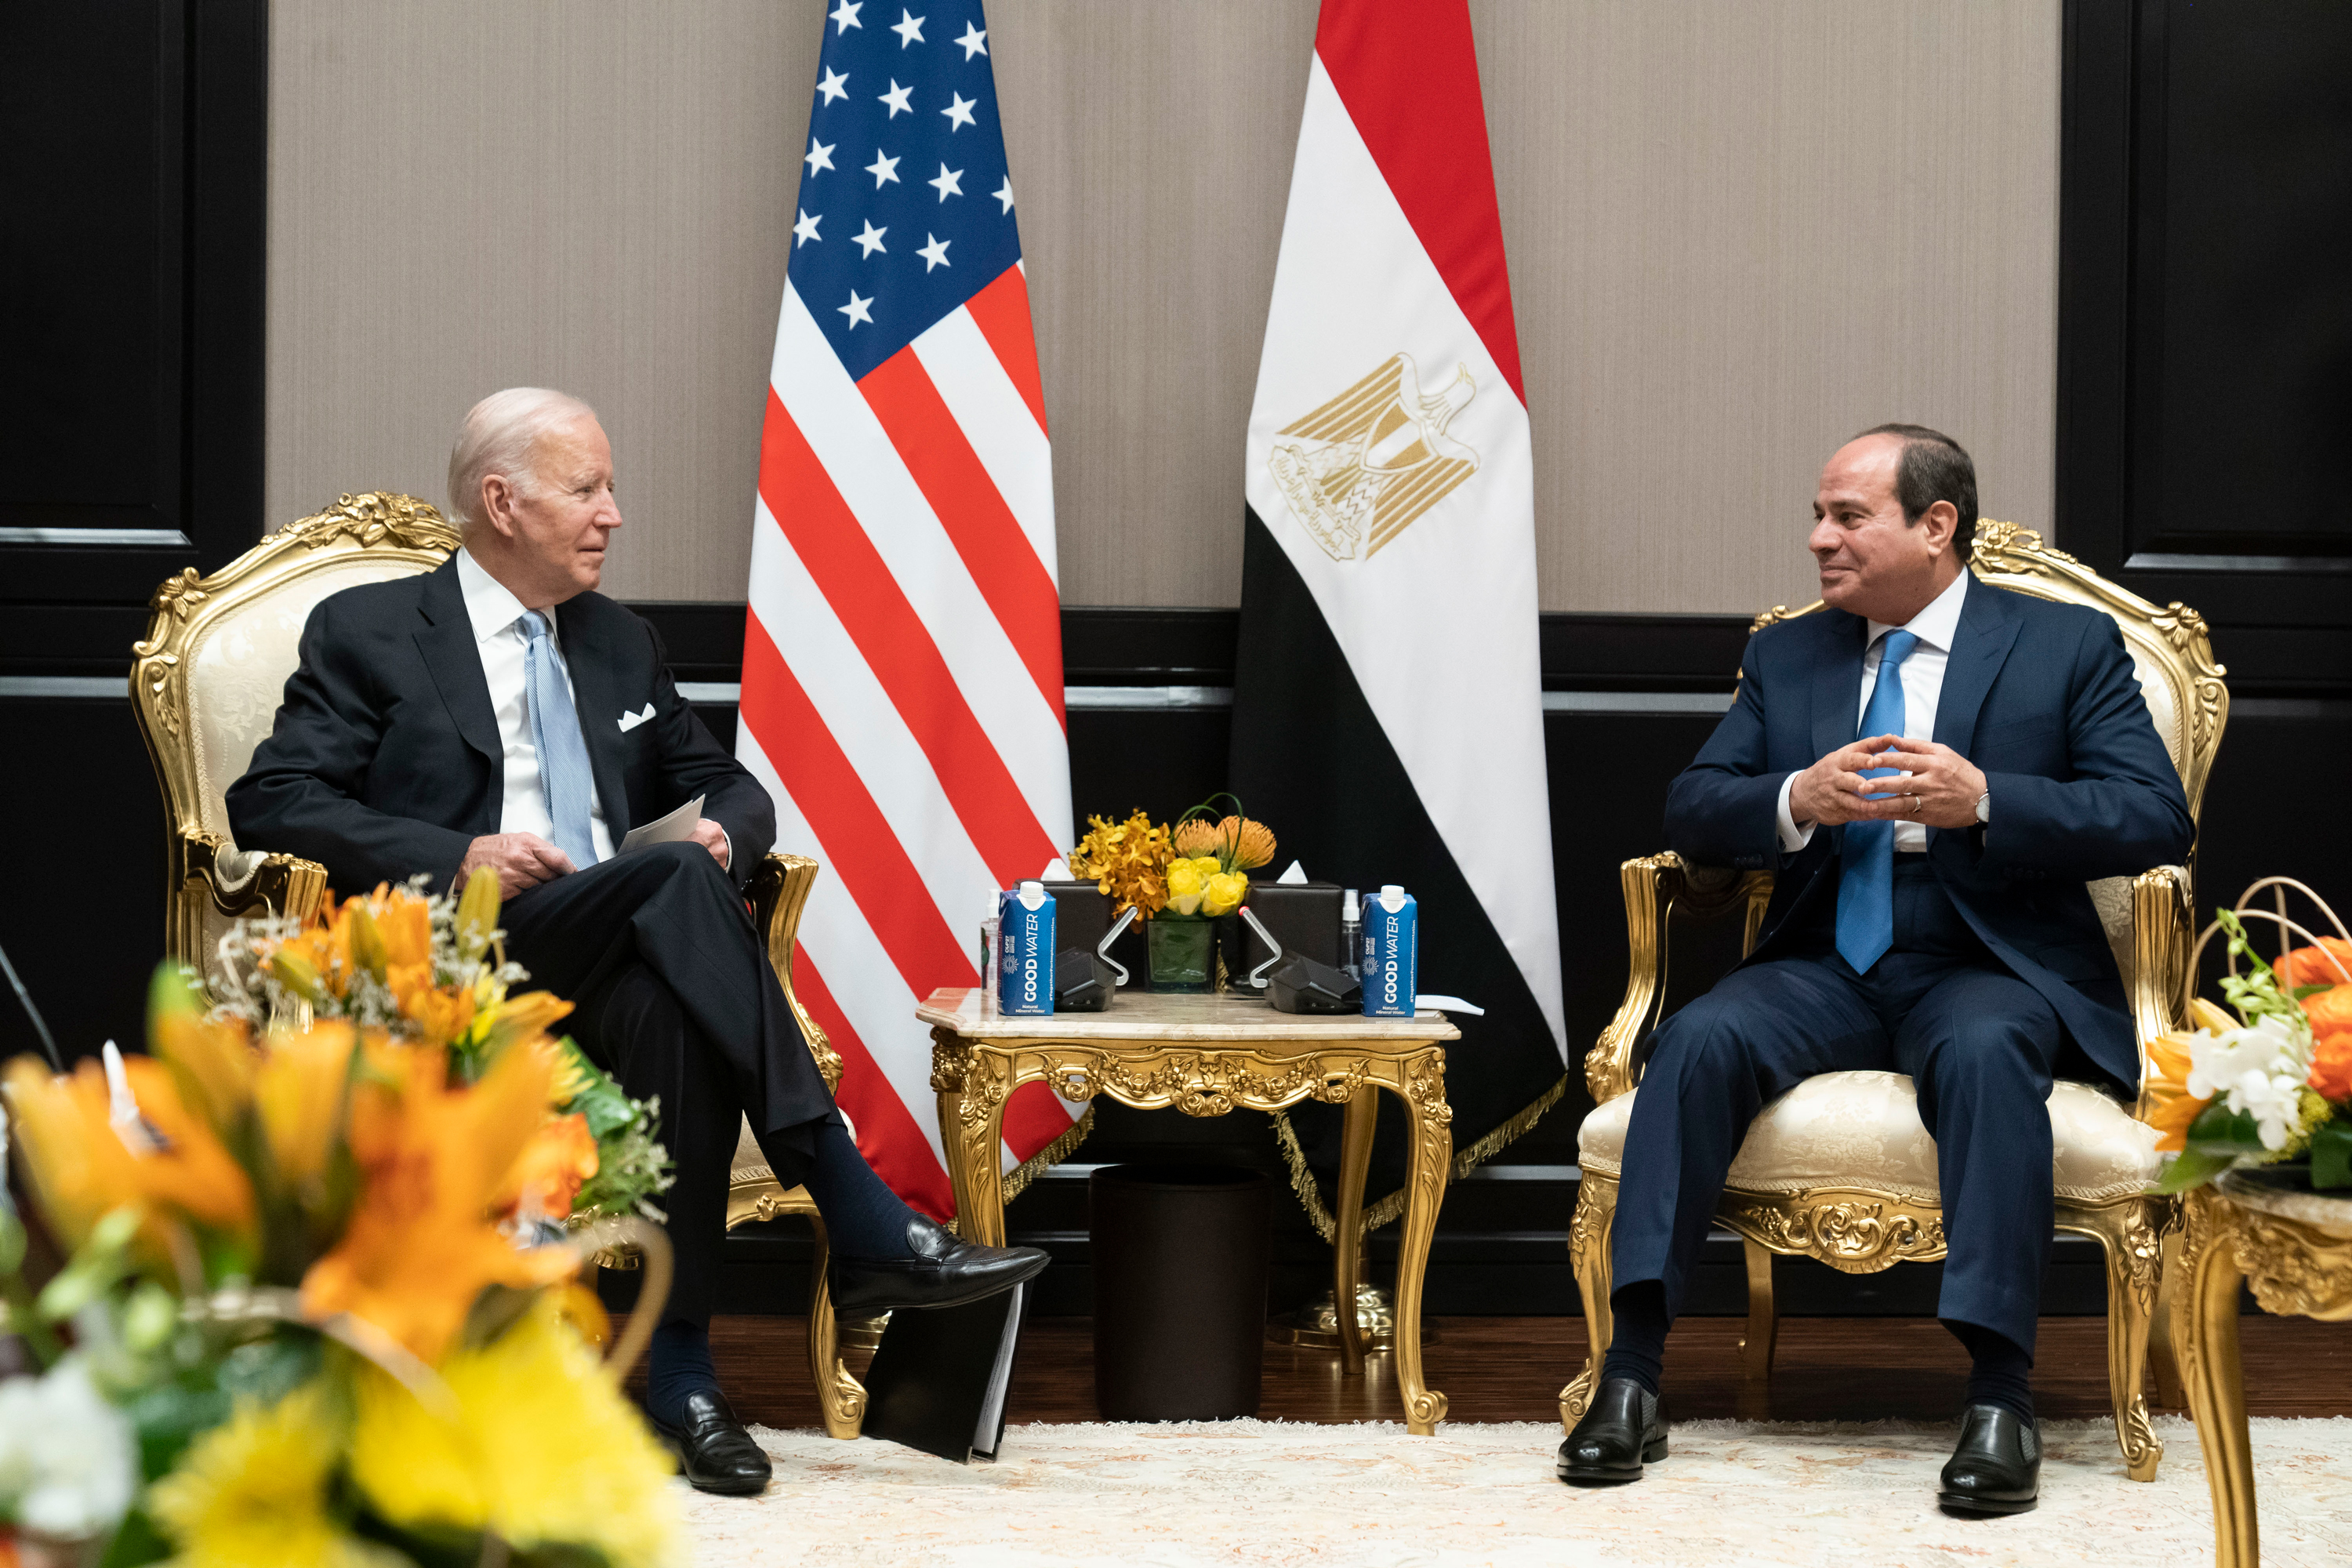 Joe Biden speaks with Egyptian President Abdel Fattah el-Sisi at the COP27 UN Climate Summit, in Sharm el-Sheikh, Egypt, on November 11, 2022.